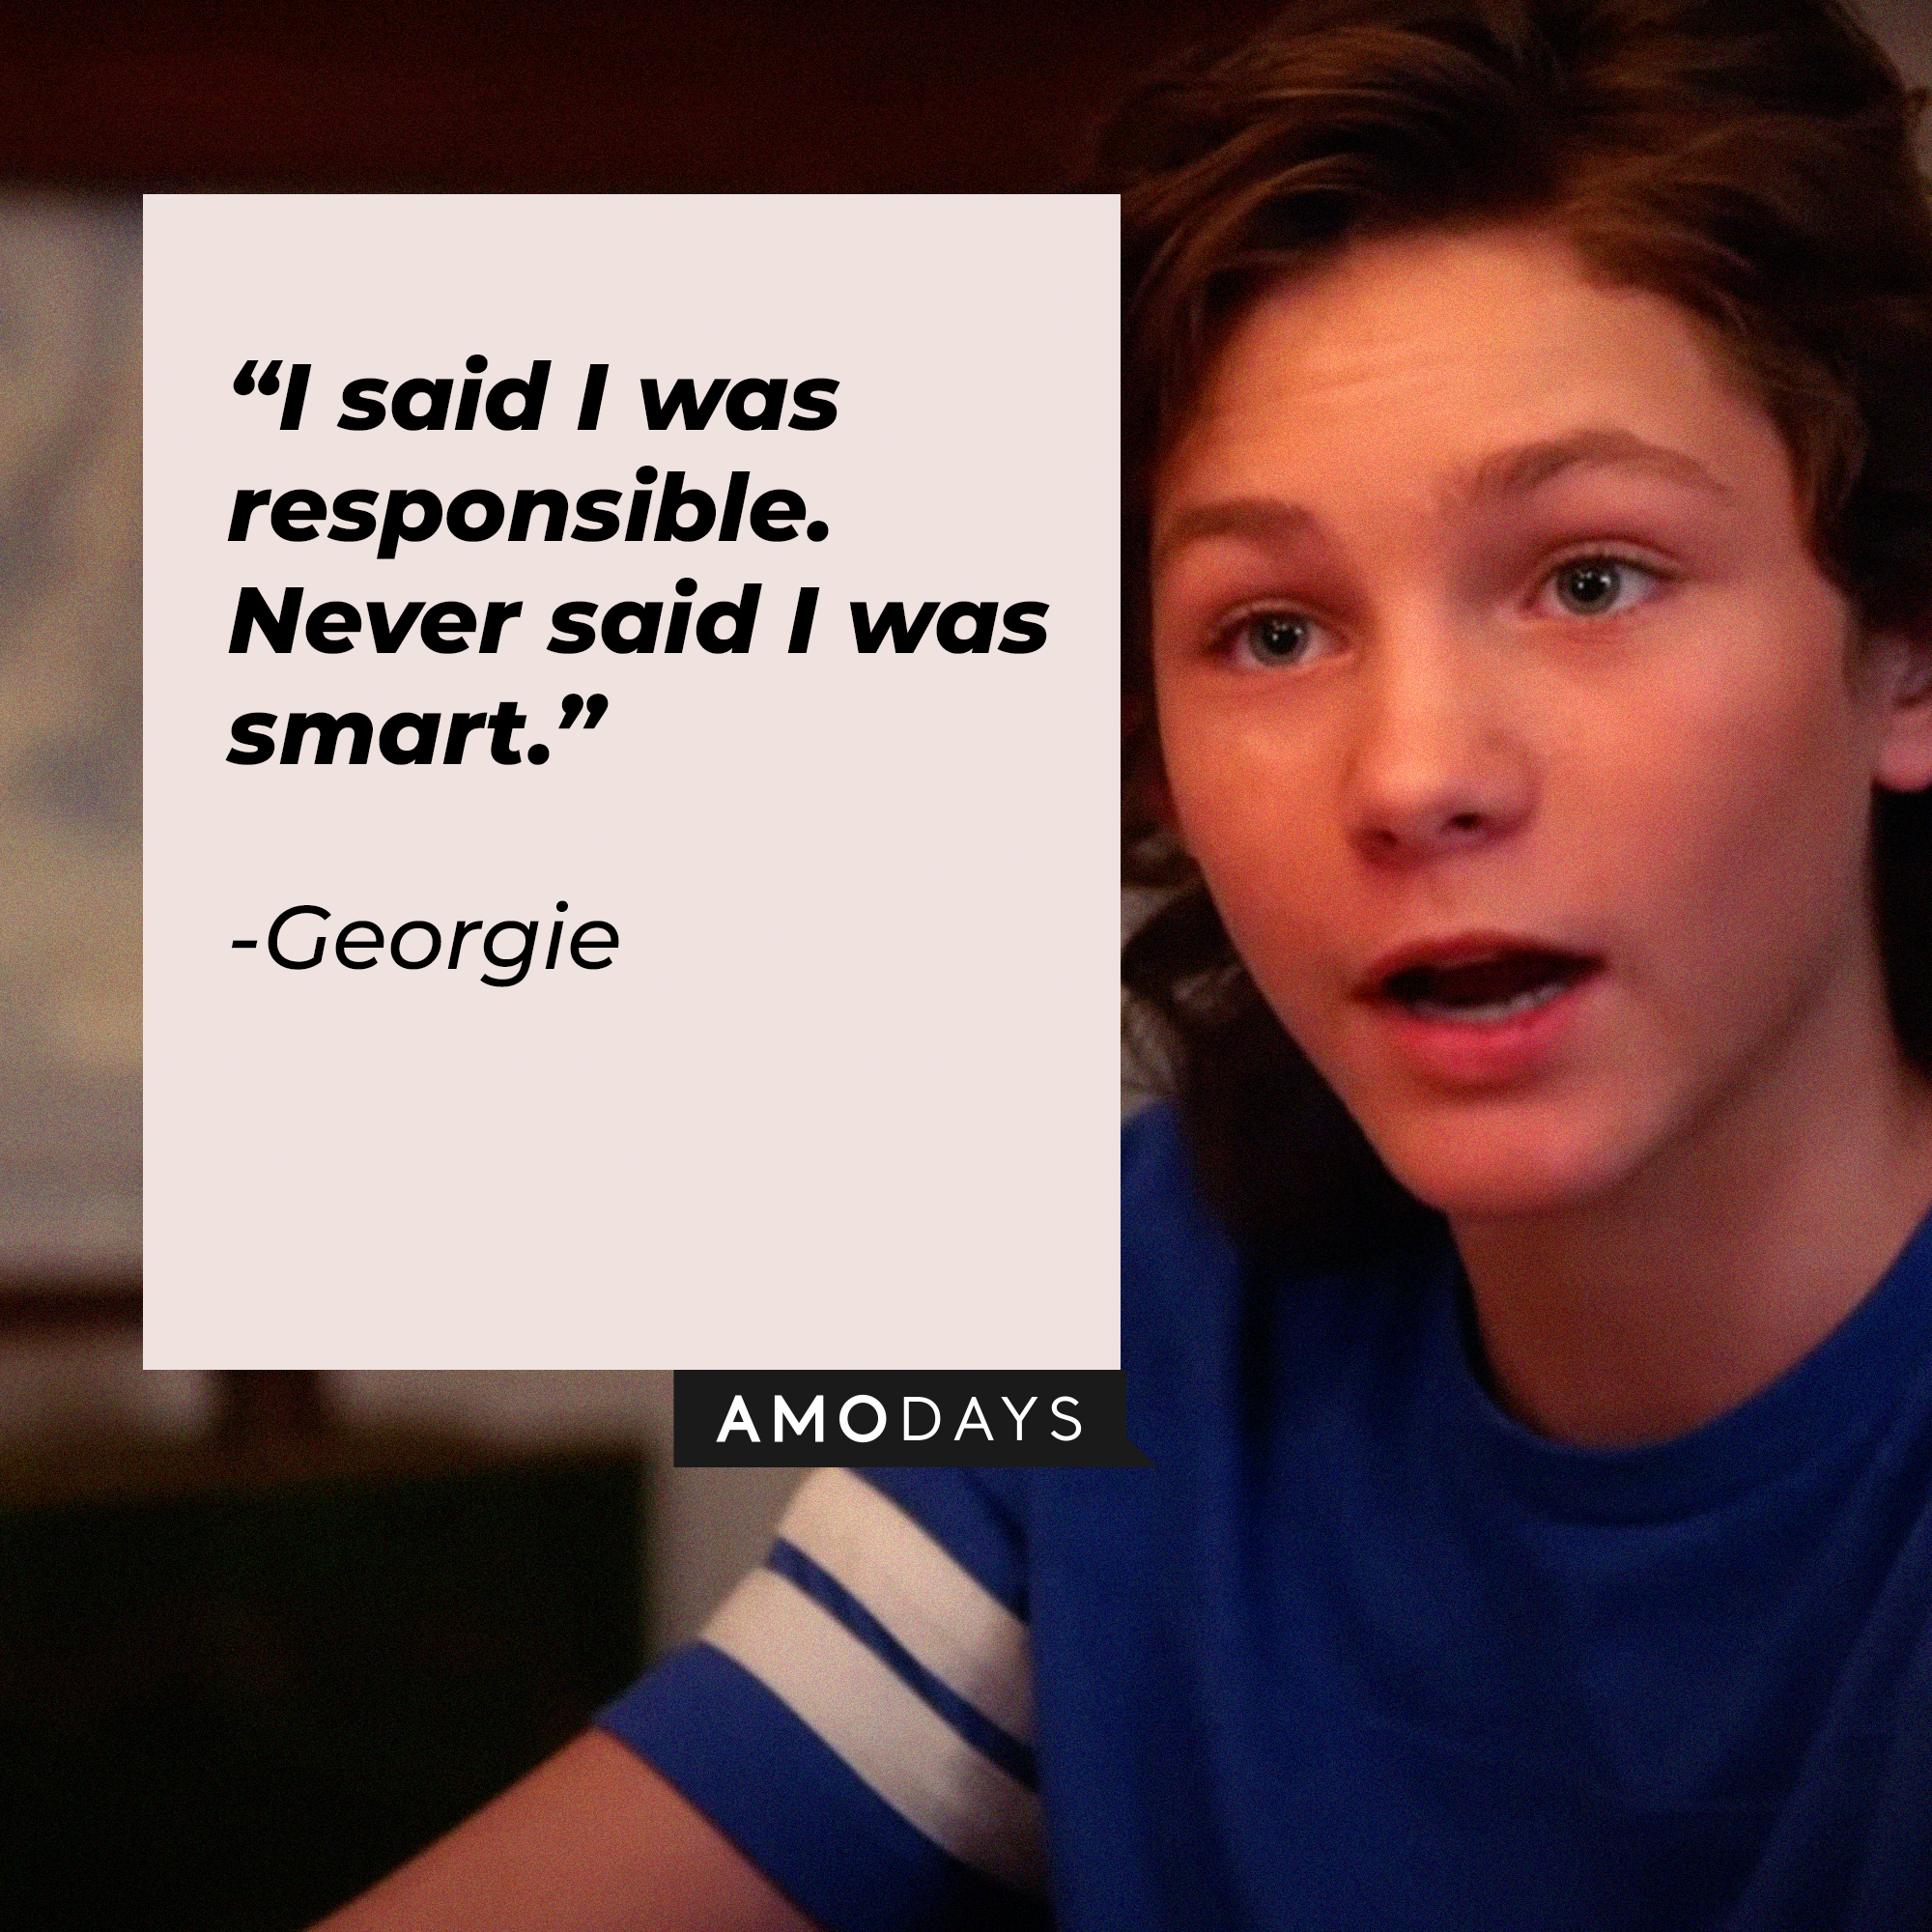 Georgie's quote: "I said I was responsible. Never said I was smart.” | Source: facebook.com/YoungSheldonCBS